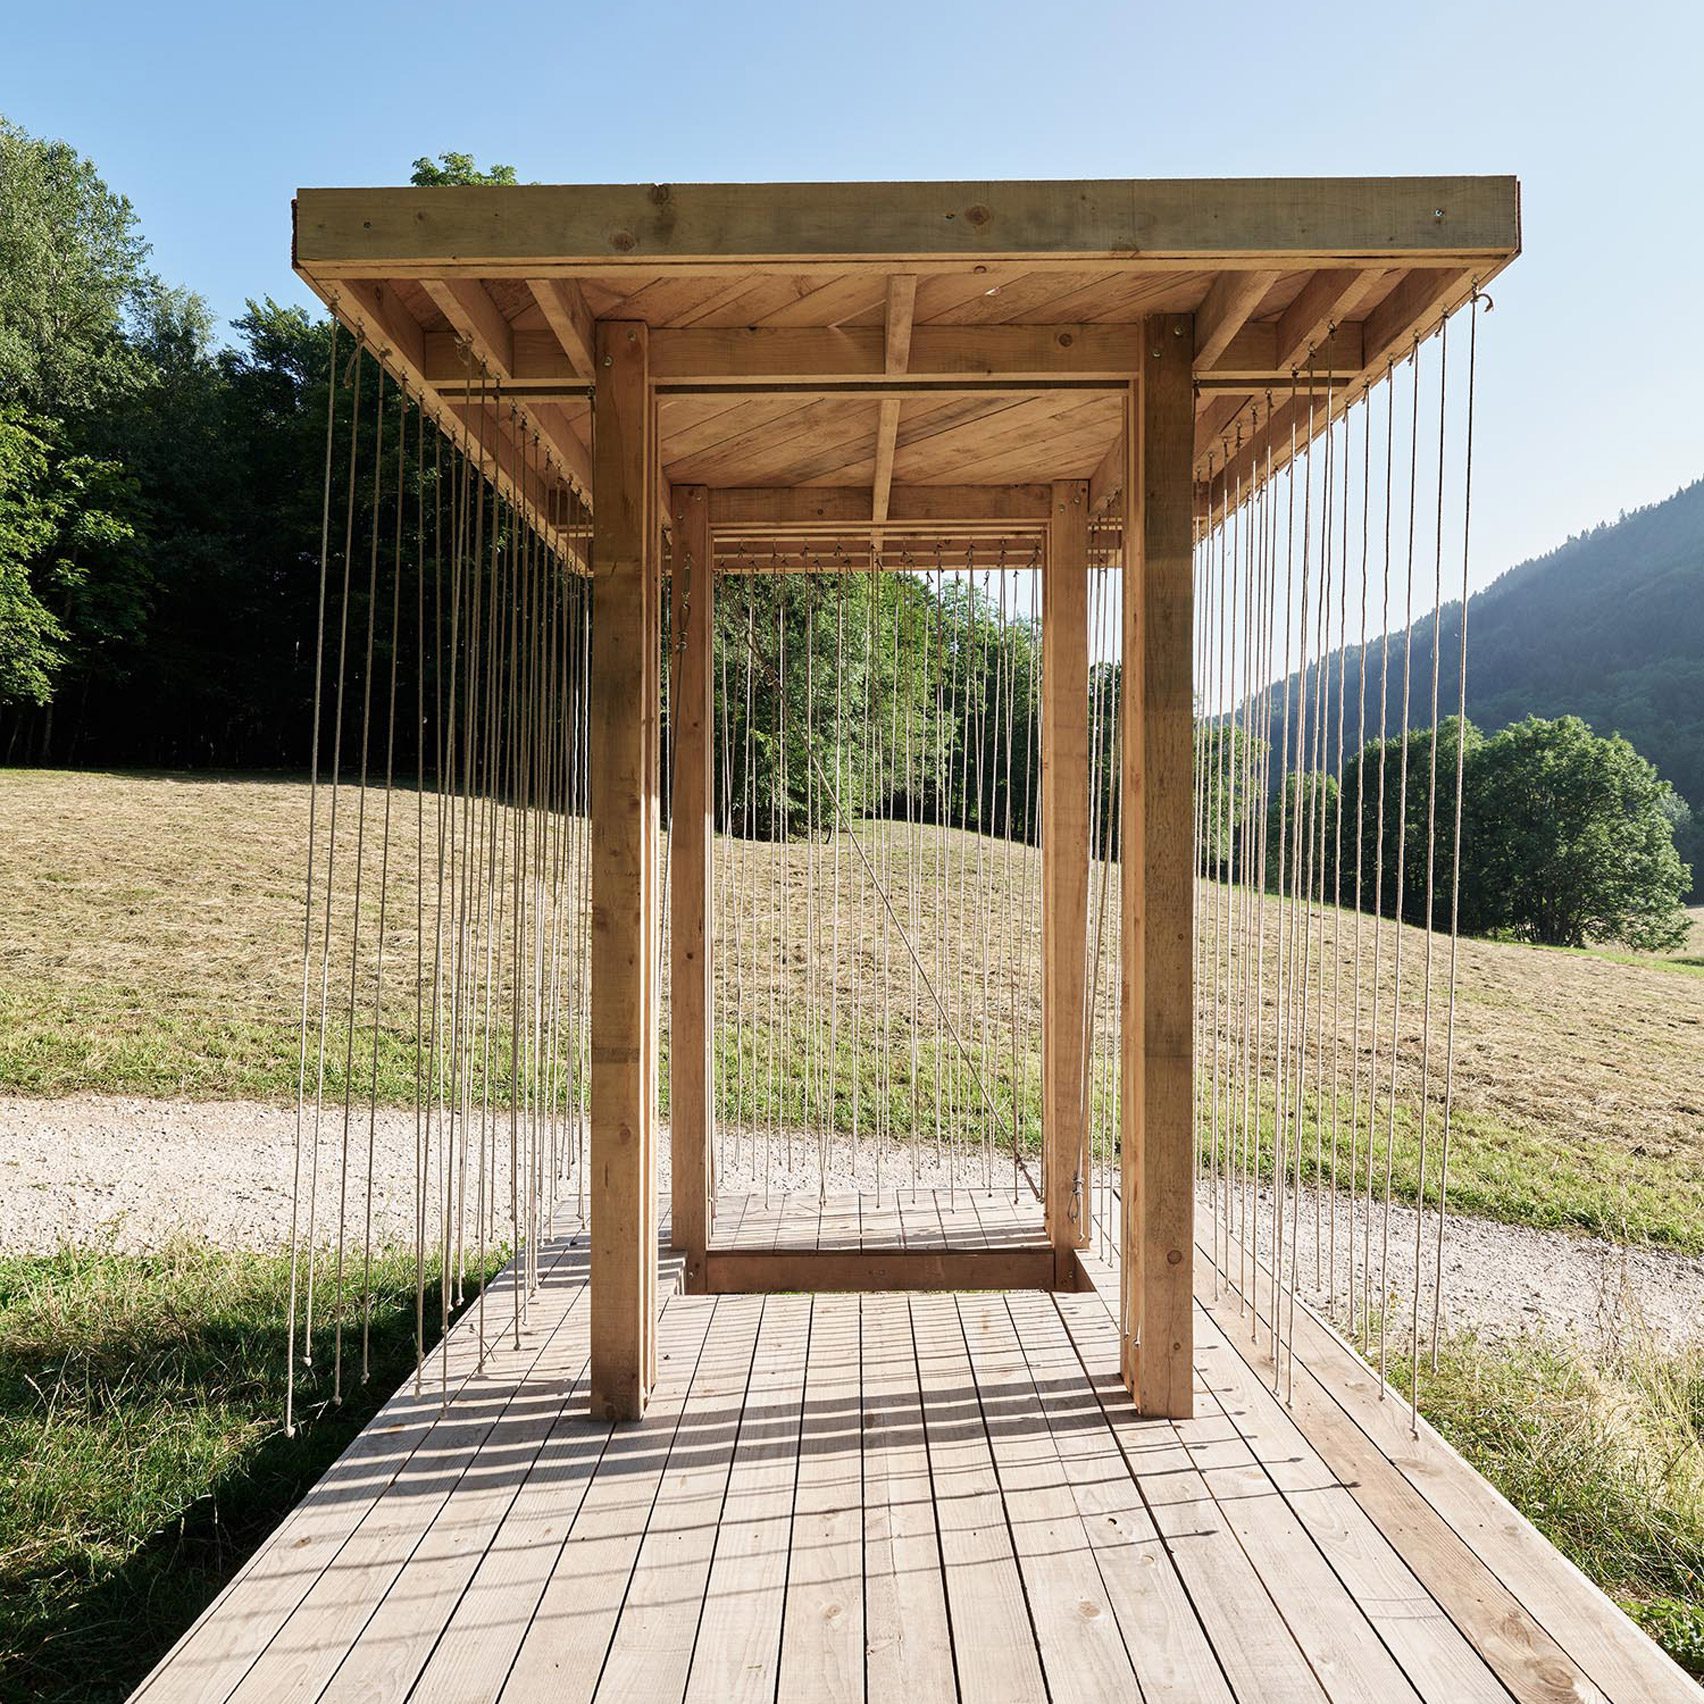 Sembilan kabin kayu dari Festival Kabin Danau Annecy | Harga Kusen Aluminium